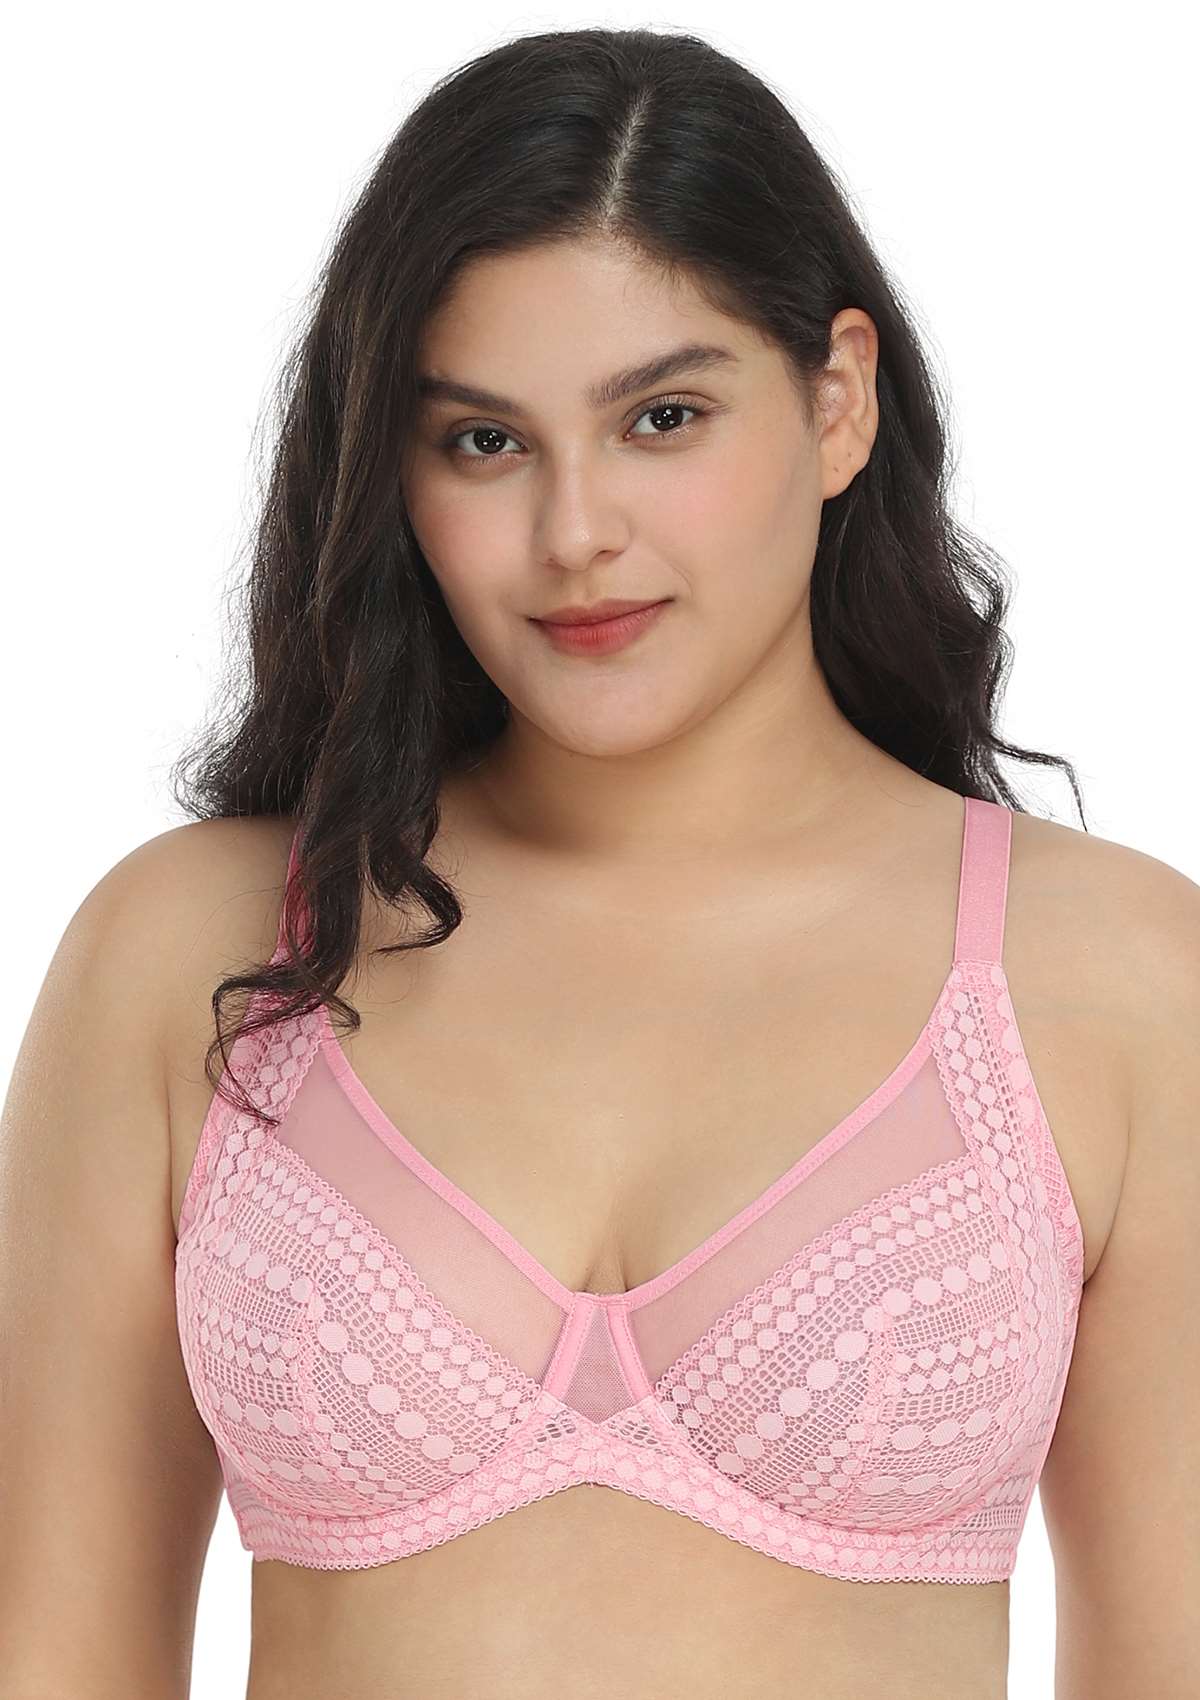 HSIA Heroine Lace Unlined Bra: Bra That Hides Back Fat - Plus Size - Pink / 34 / DD/E